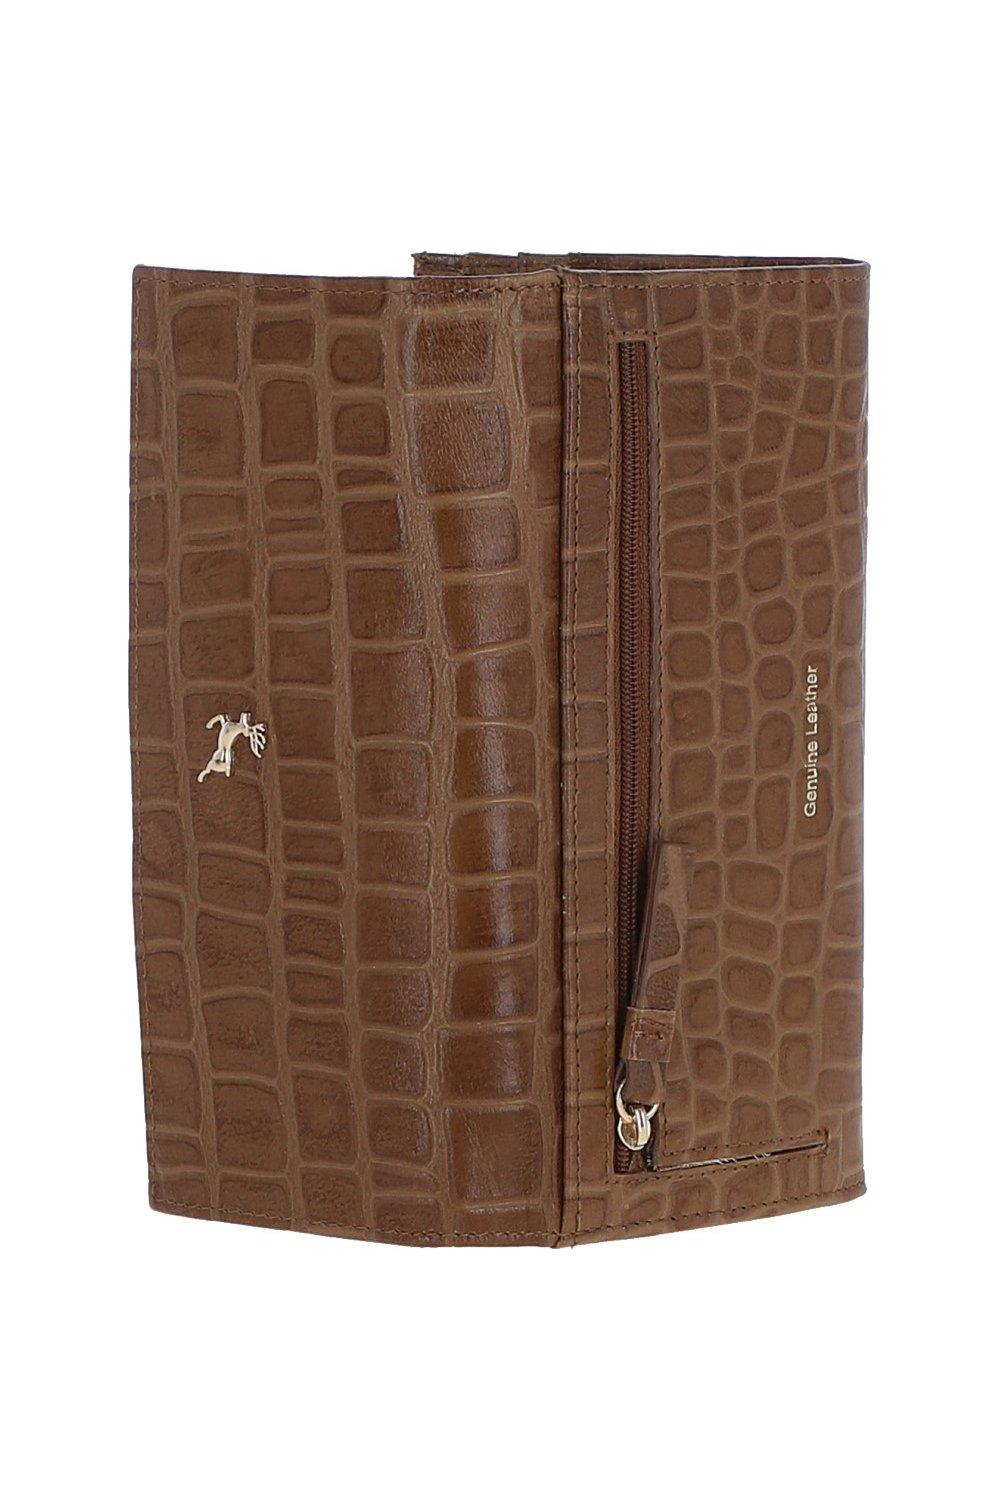 Bags & Purses, Croc Print 7 Card RFID Large Real Leather Purse